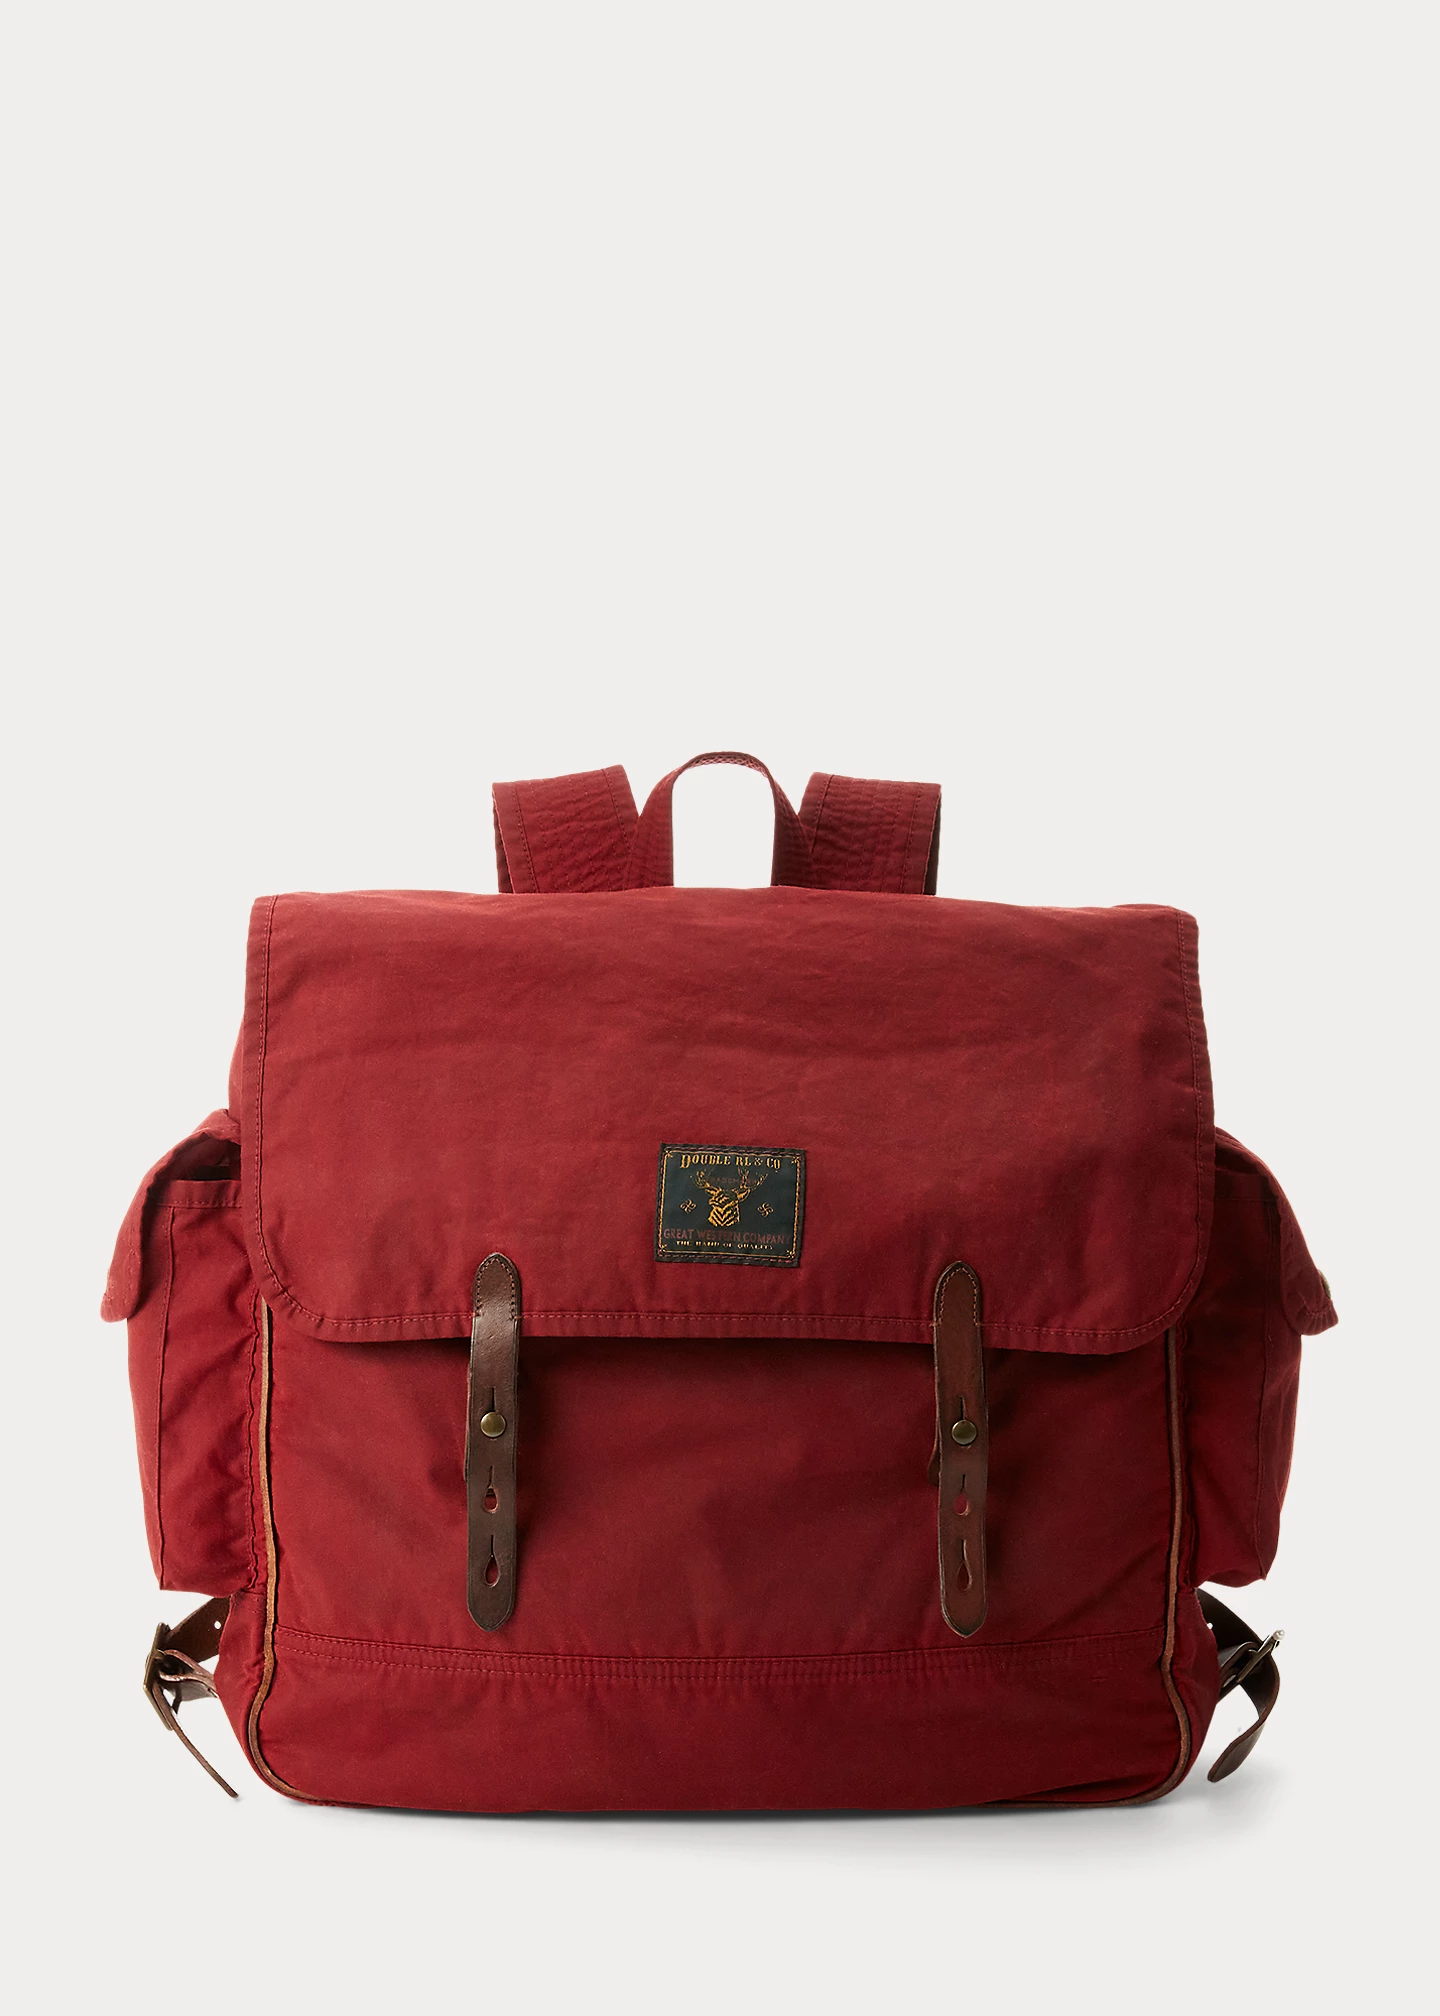 stylish handbagsLeather-Trim Oilcloth Backpack-,$78.39